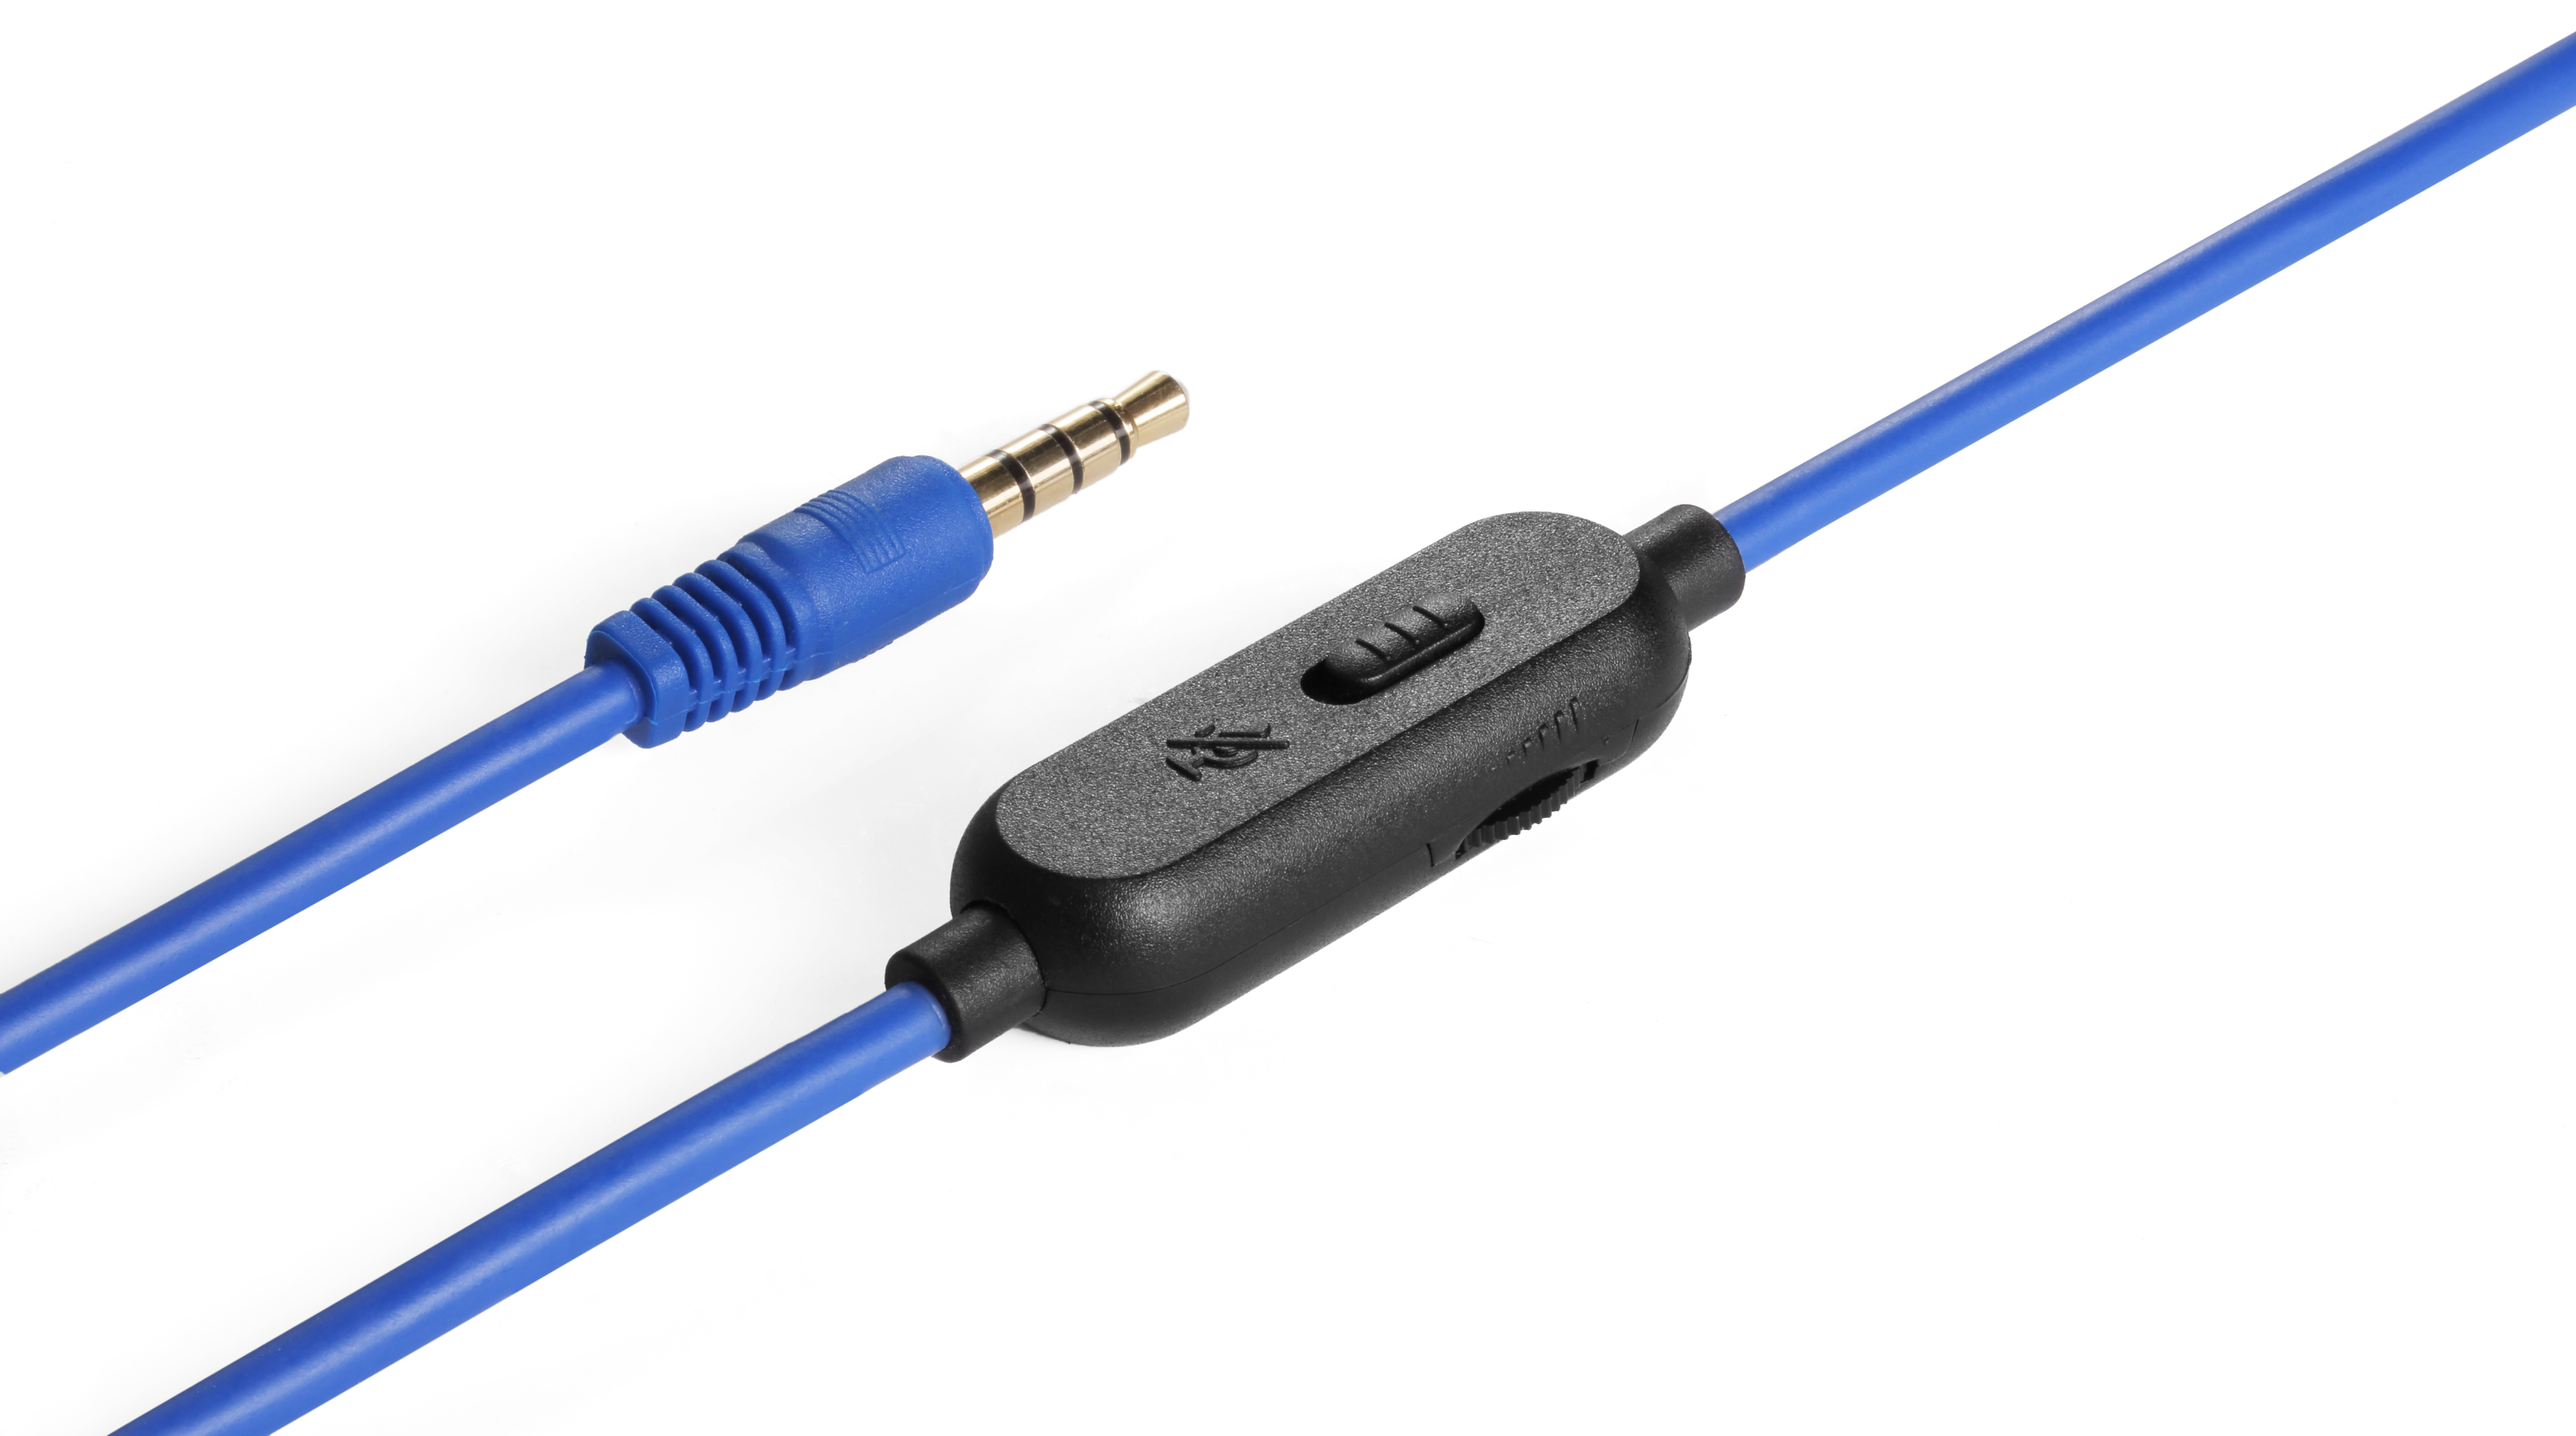 , Headset On-ear abnehmbaren Schwarz/Blau SNAKEBYTE Headset und Mikrofon Stereo Gaming 4